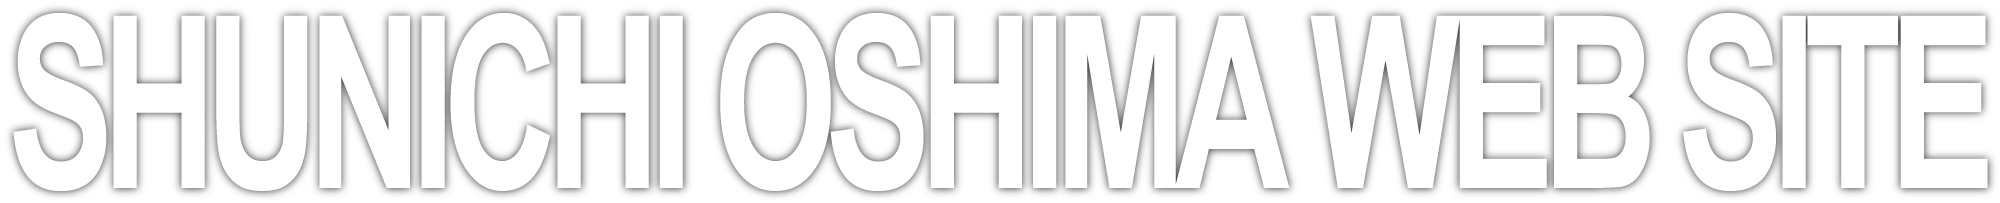 Shnnichi Oshima Web Site